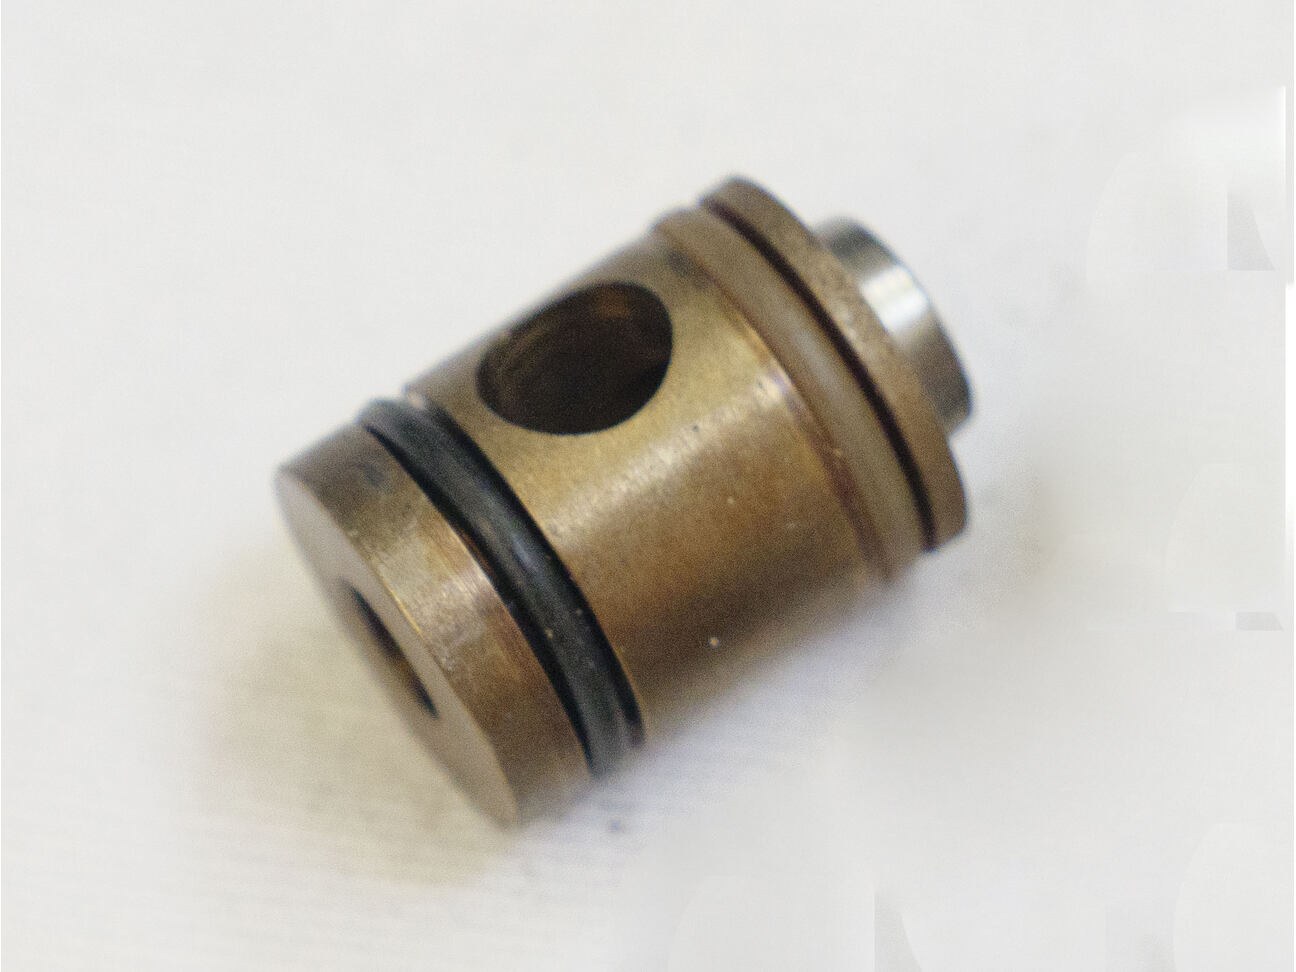 Used F1 Illustrator valve with 1/8th lip